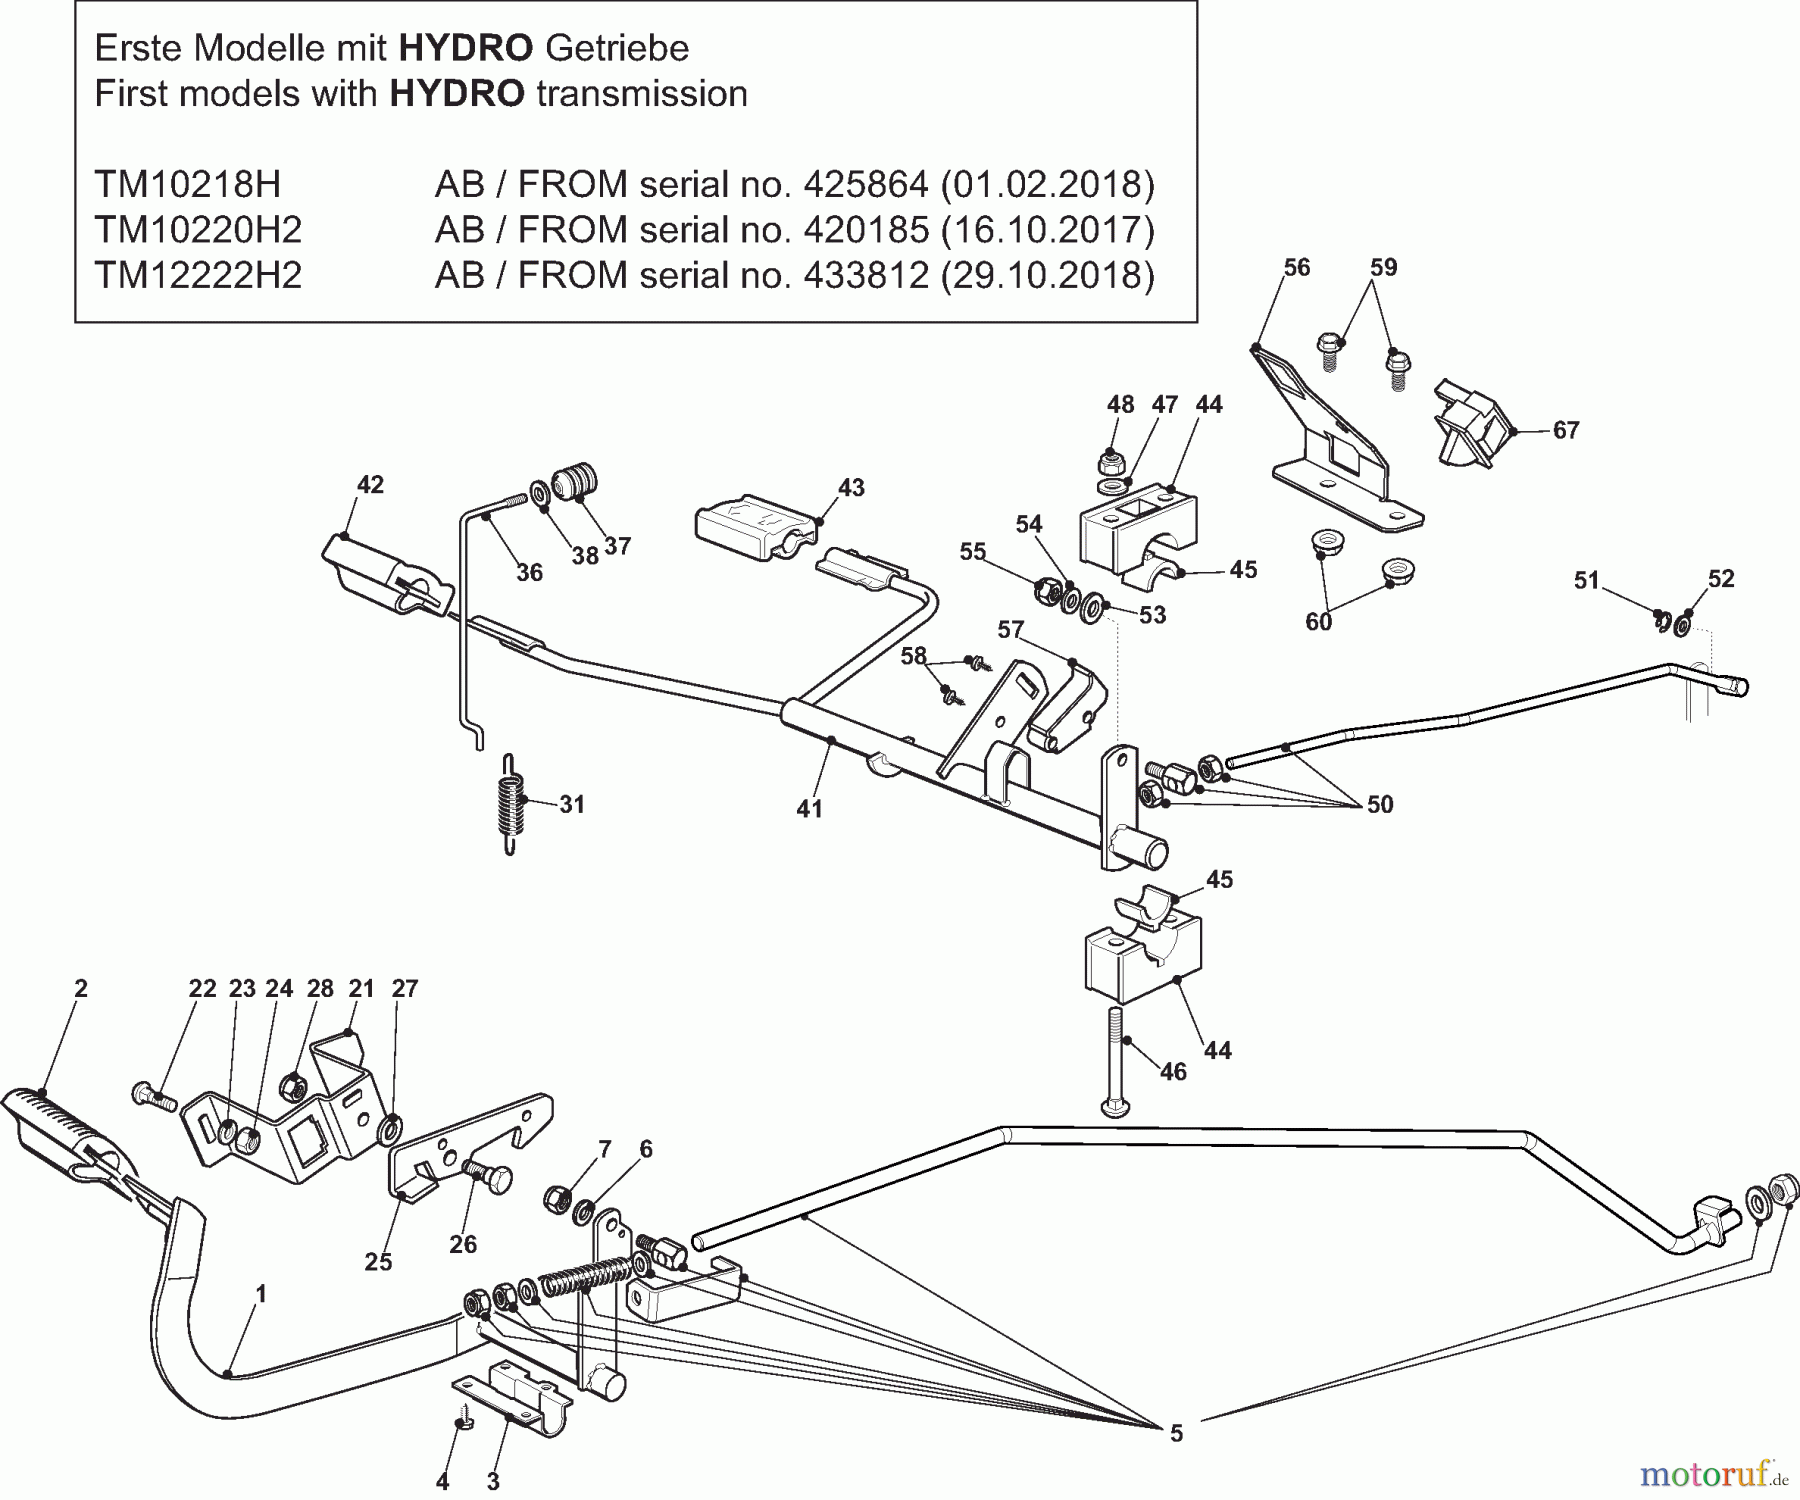  Dolmar Rasentraktoren TM10220H2 TM10220H2 (2015-2019) 4ya  Pedale für HYDRO Getriebe